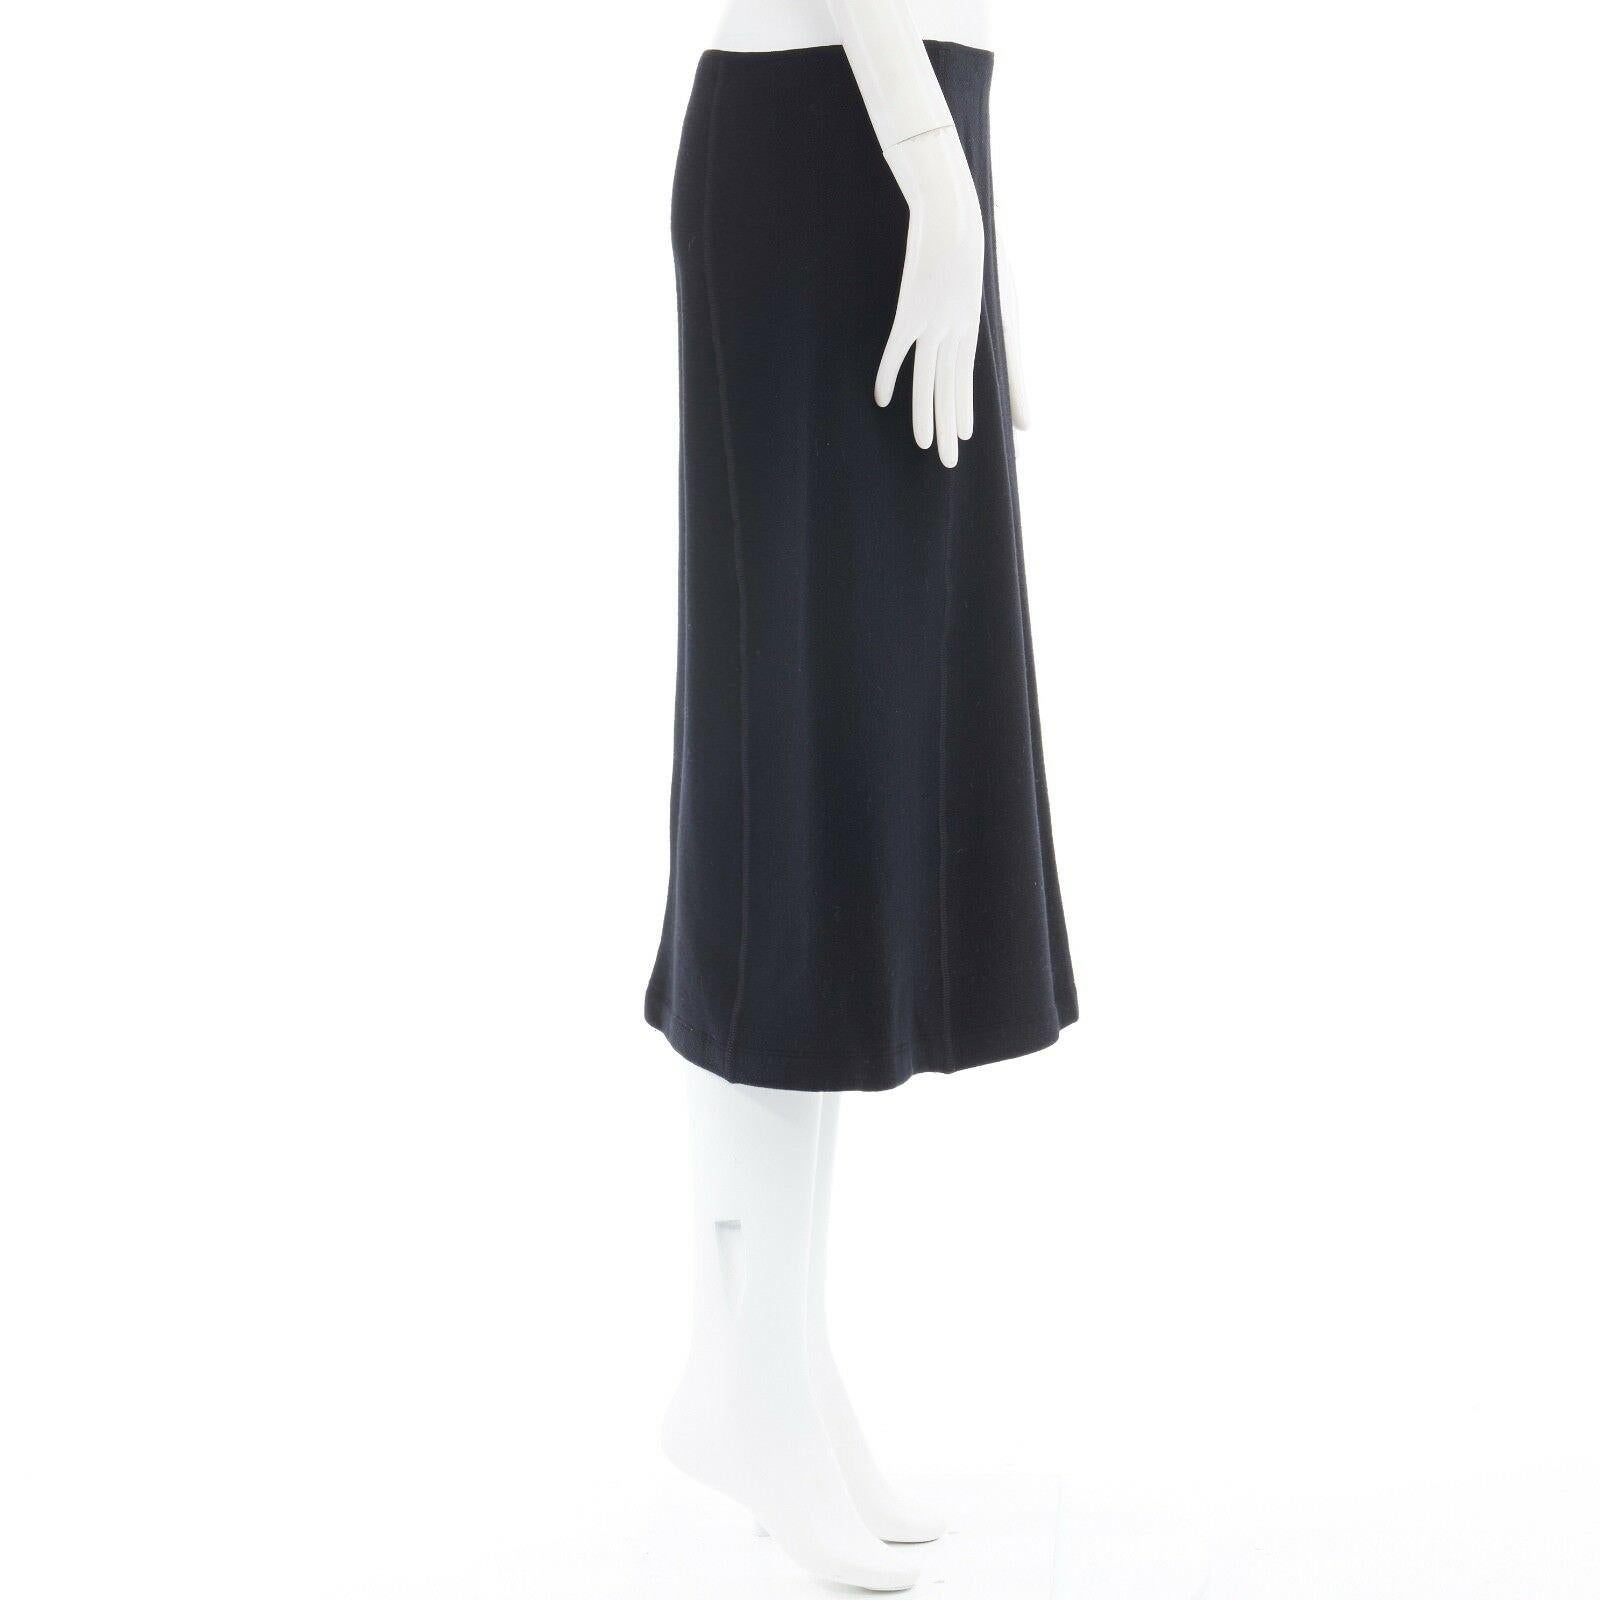 a line black skirt knee length